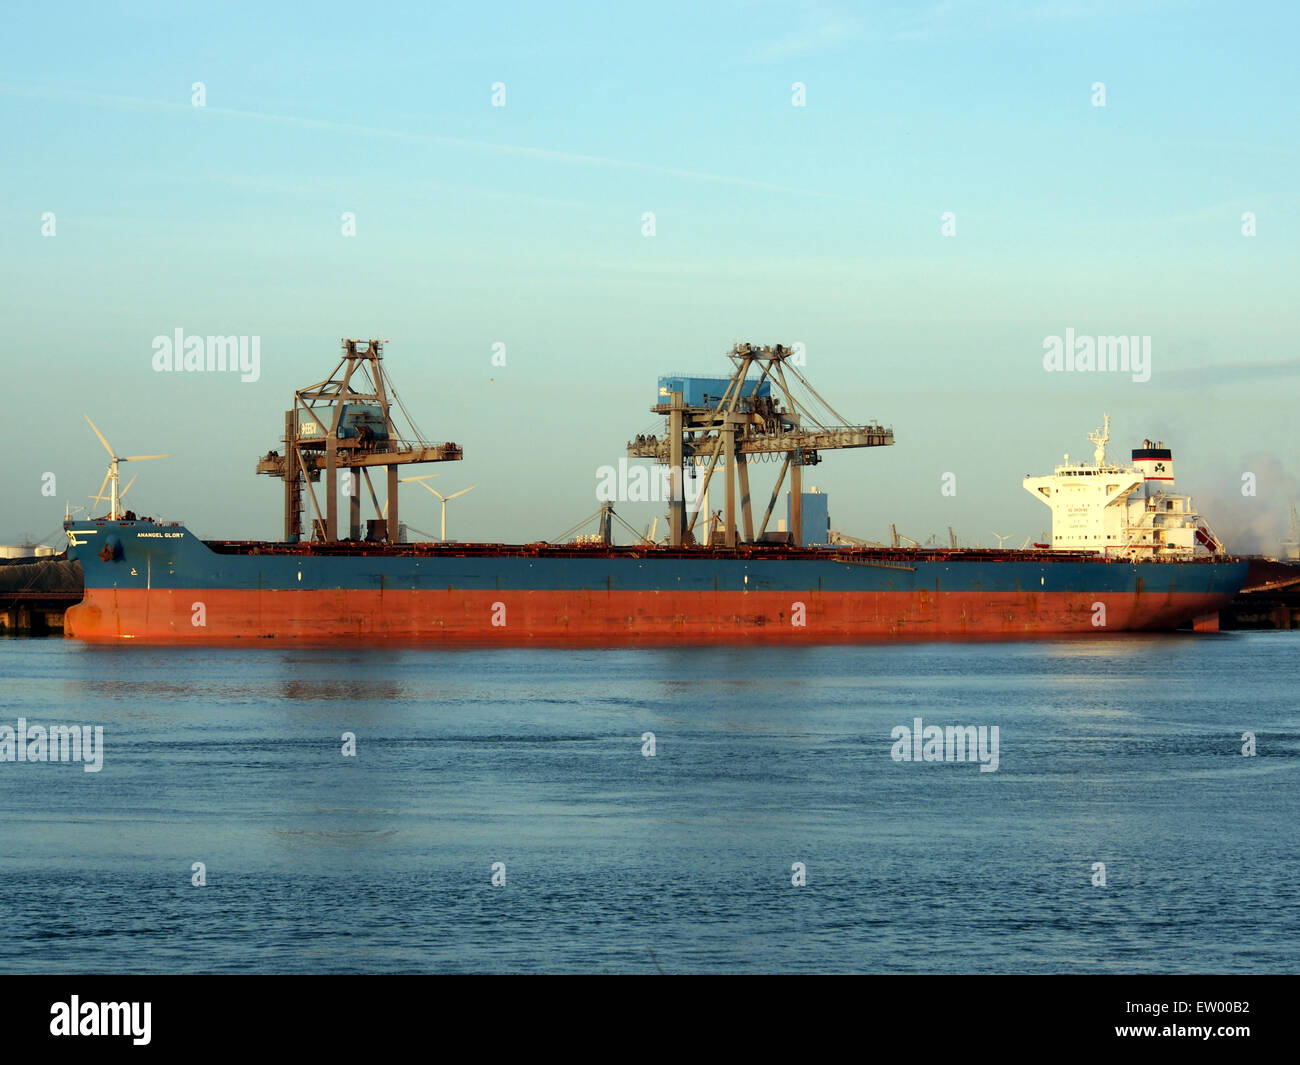 Anangel Glory - IMO 9434383, Calandkanaal, Port of Rotterdam, pic1 Stock Photo